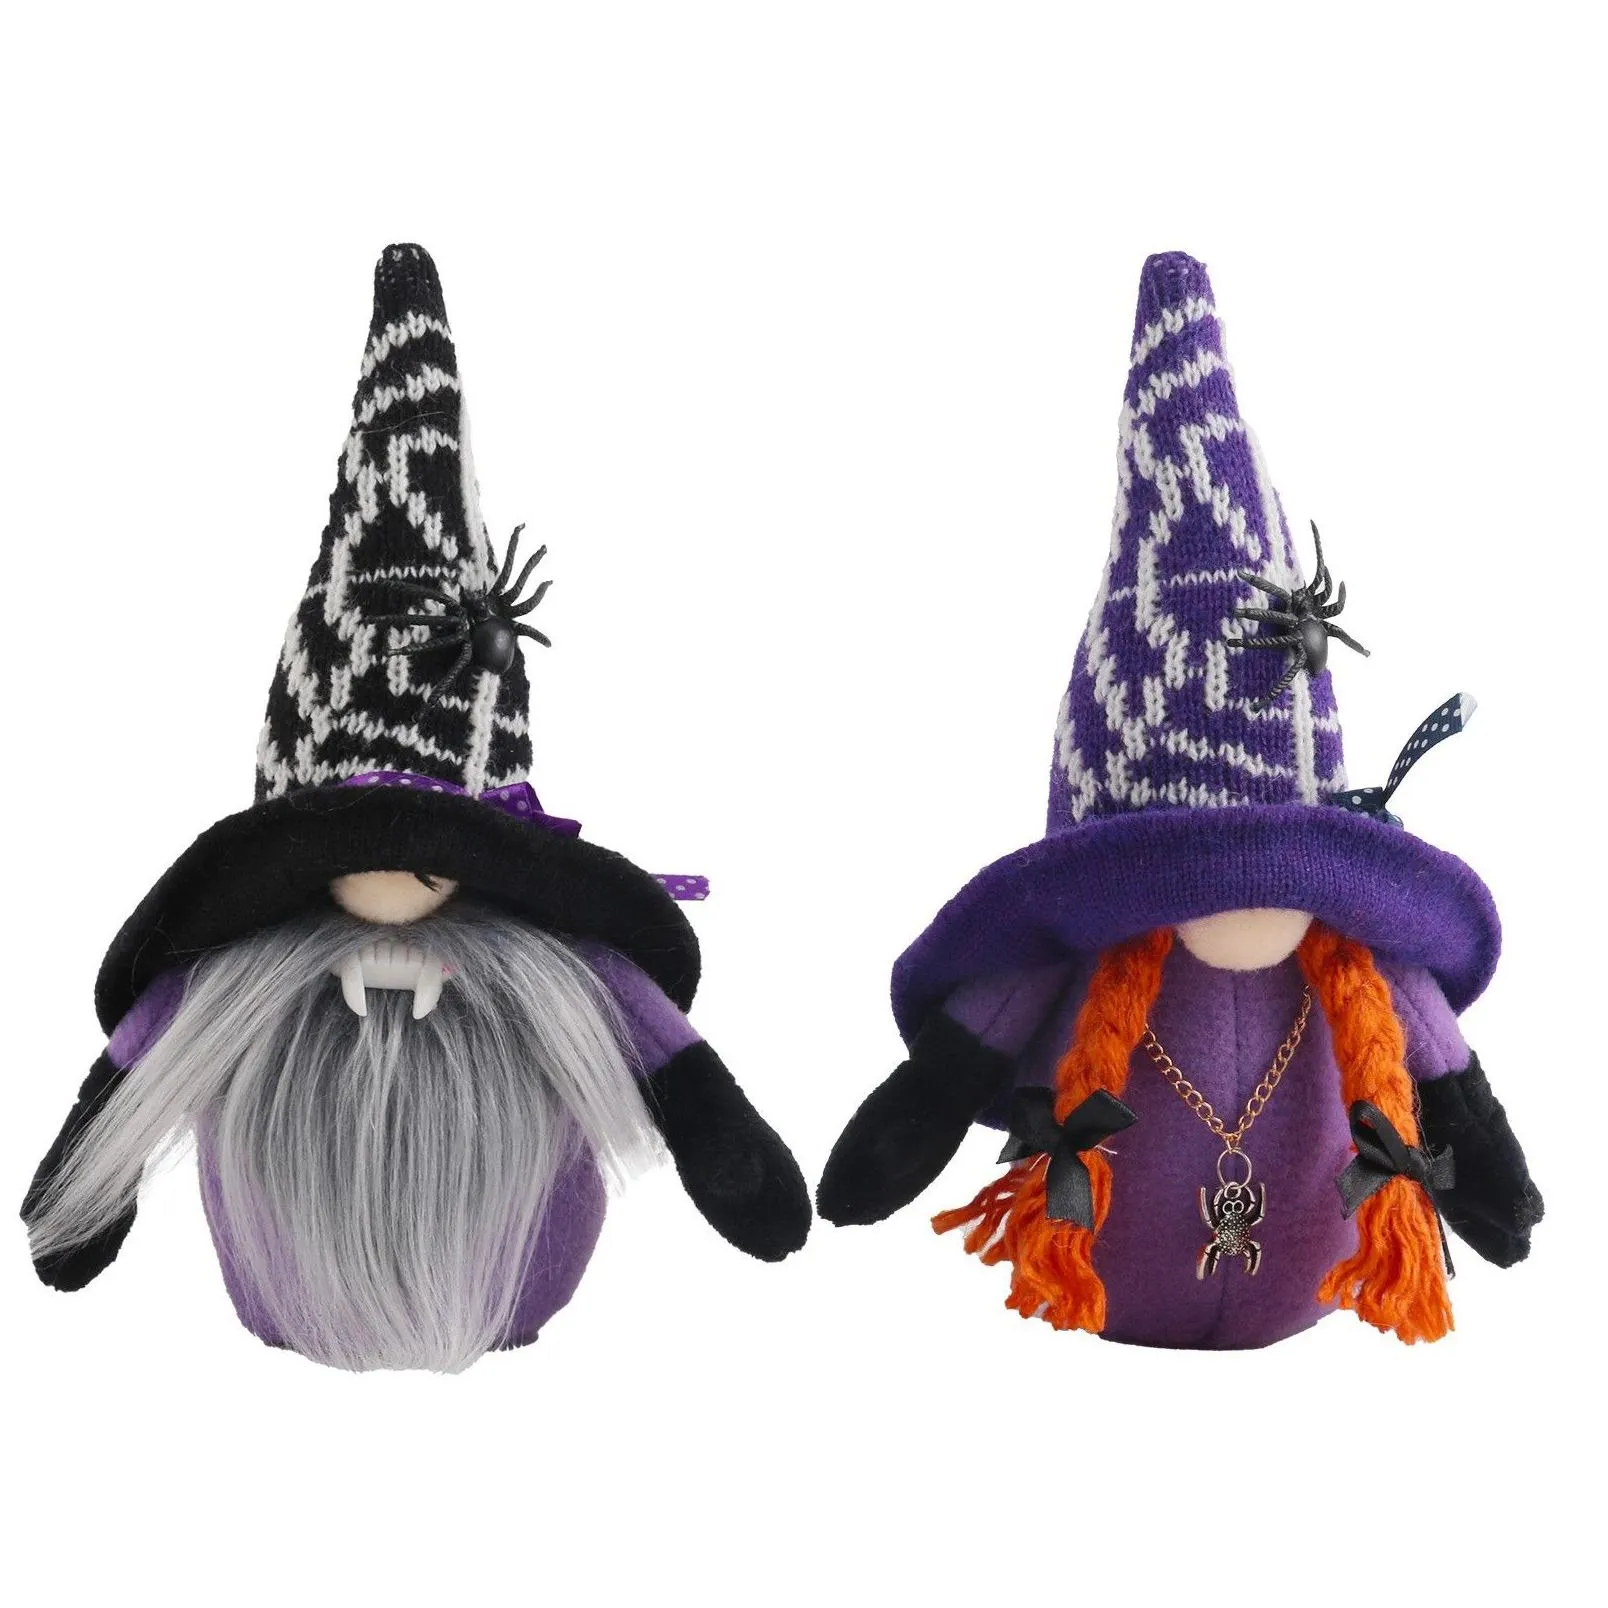 new halloween decoration faceless dwarf doll ornaments dolls spider bat party decorations